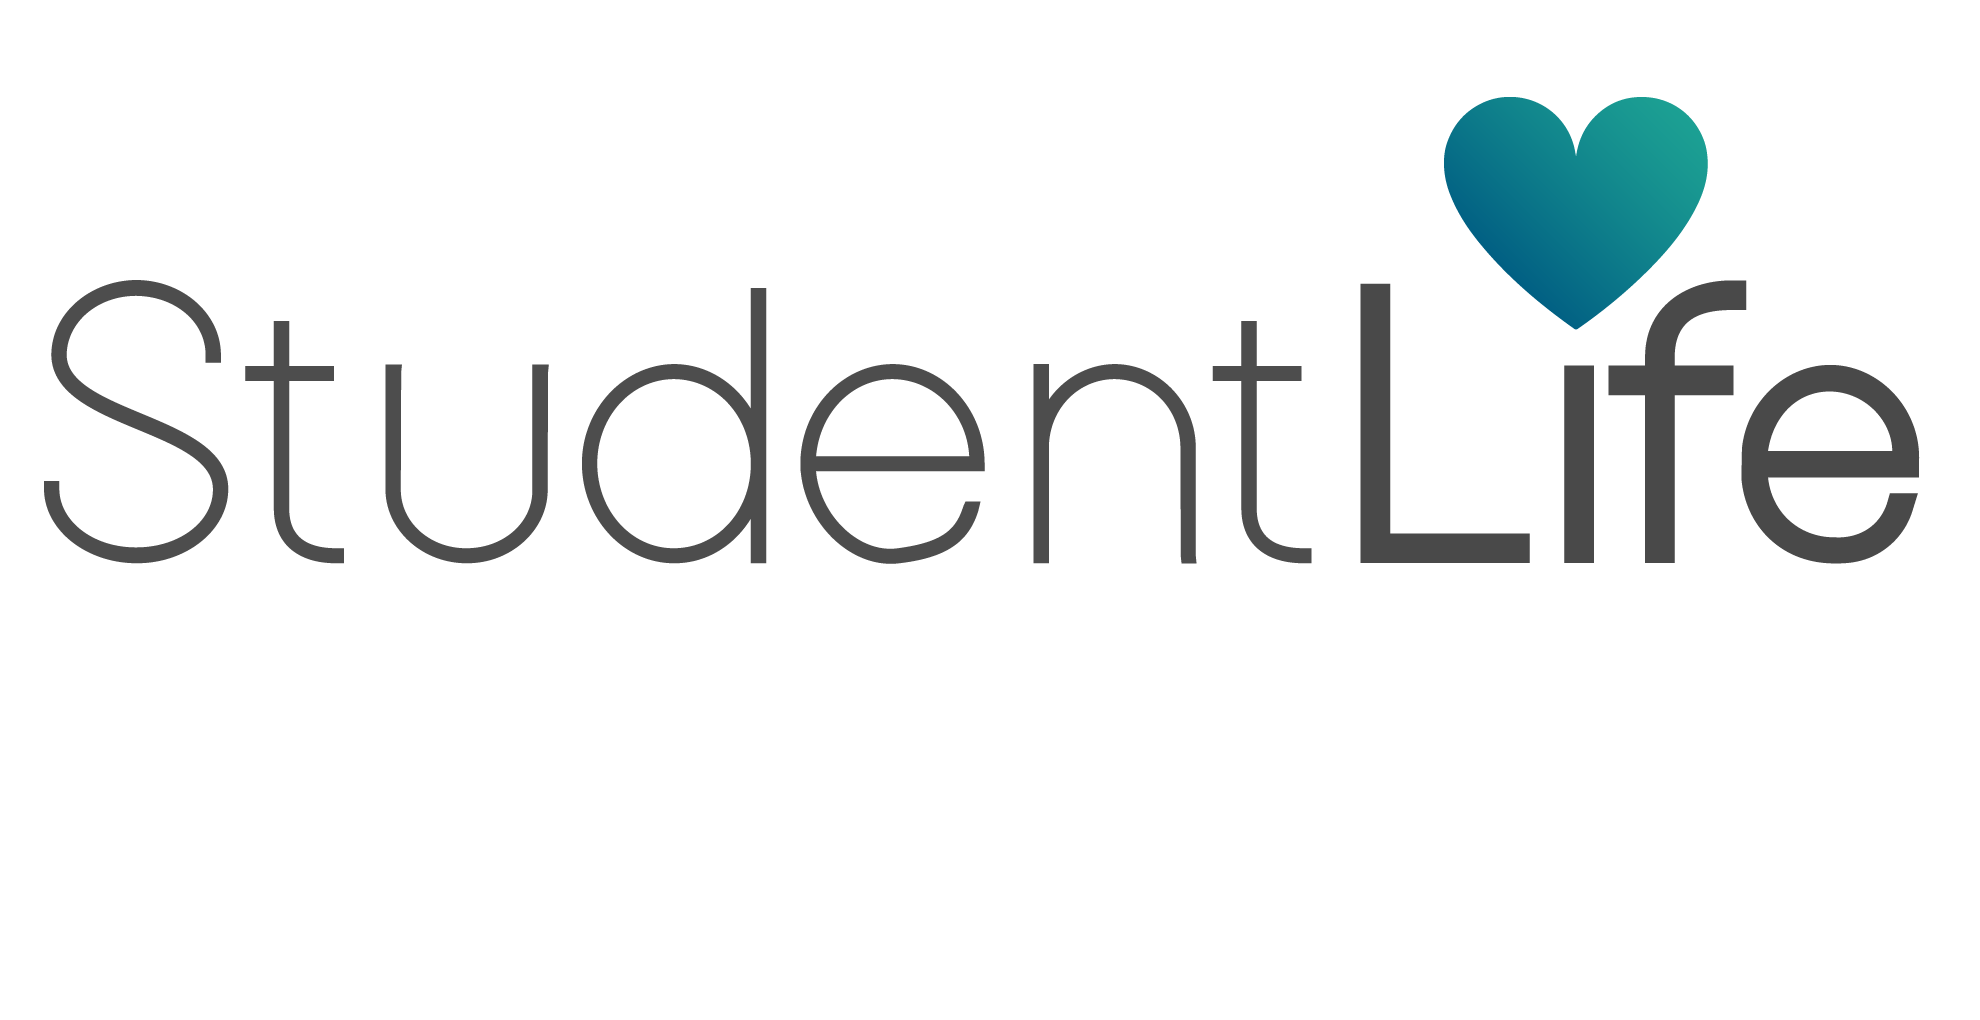 StudentLife logo colour